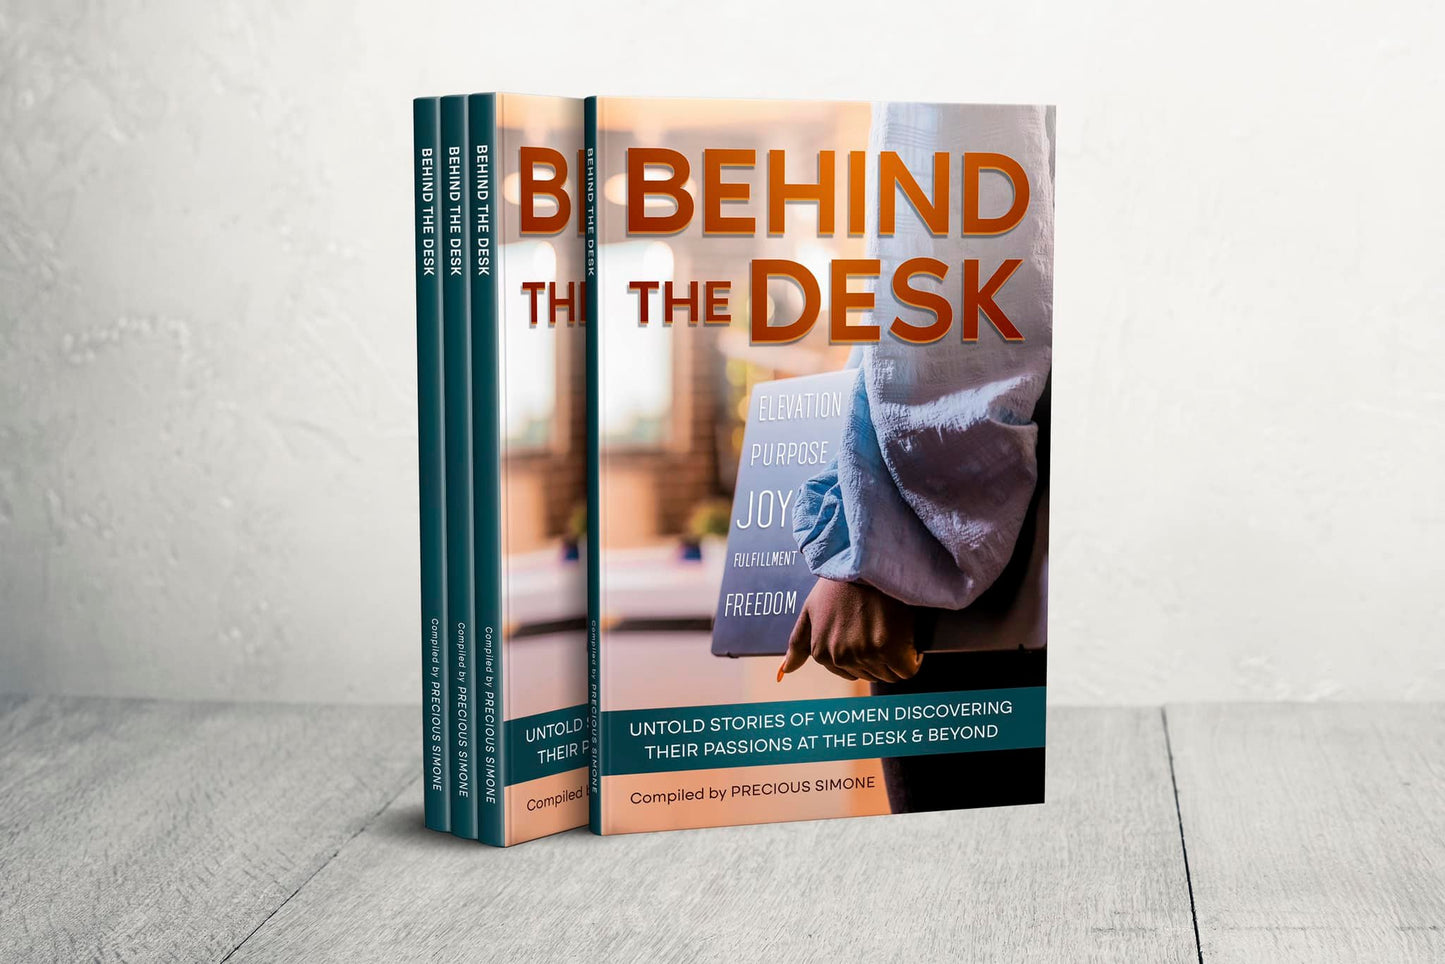 Behind The Desk